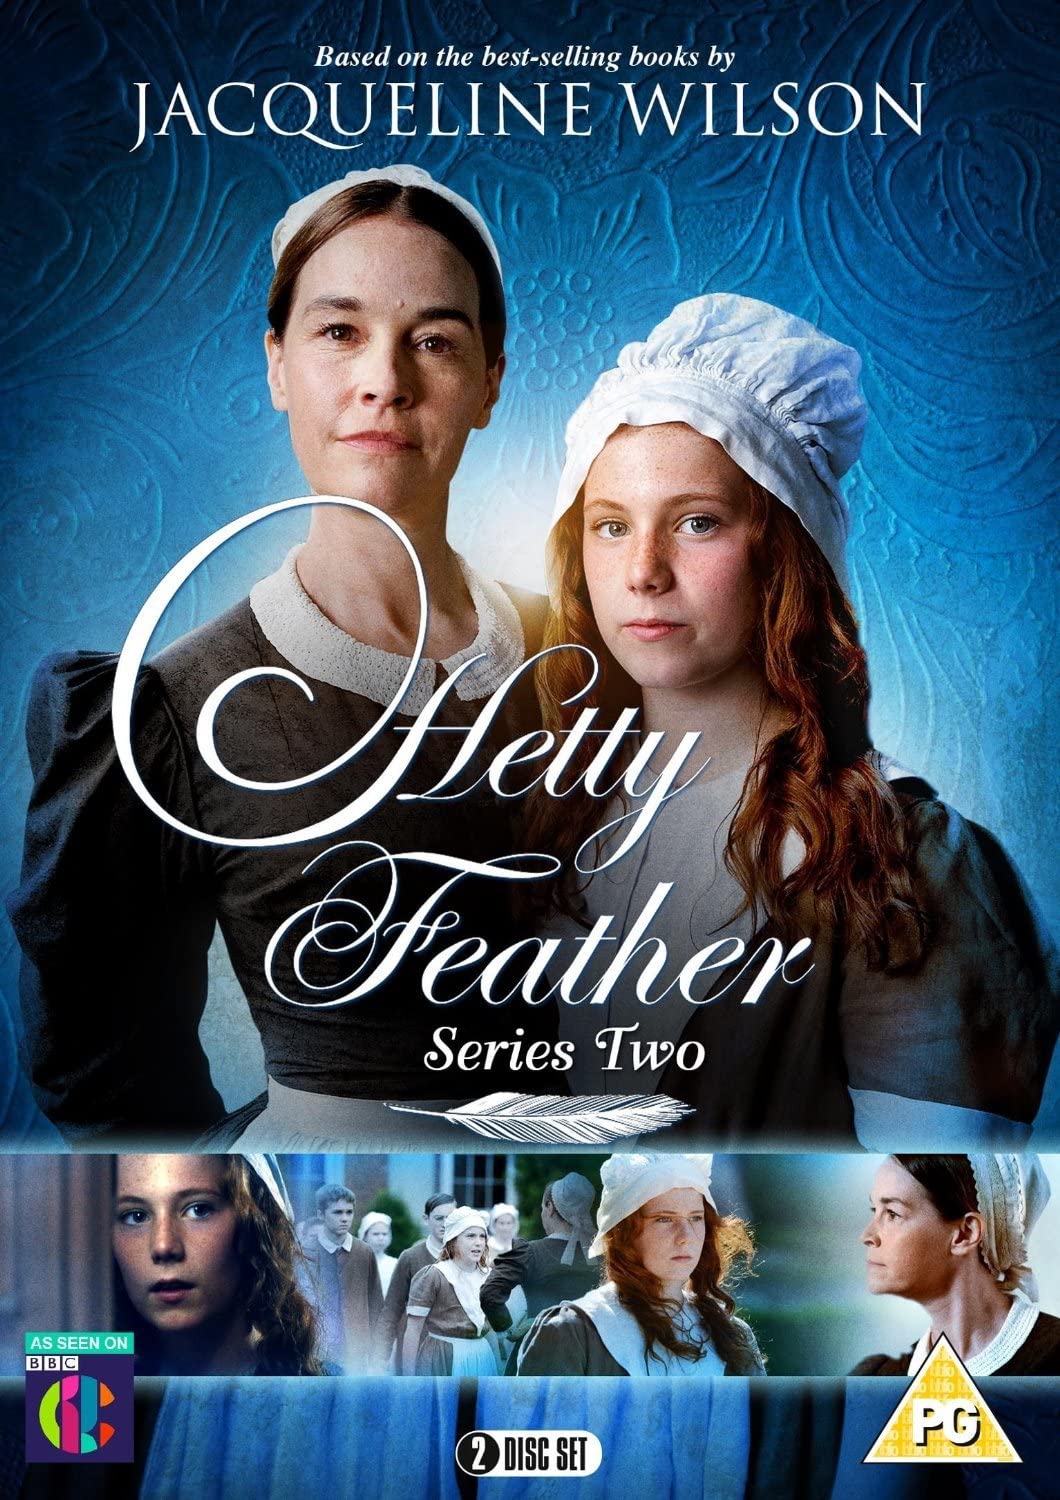 Hetty Feather Series 2 (BBC) (Jacqueline Wilson) - Drama [DVD]